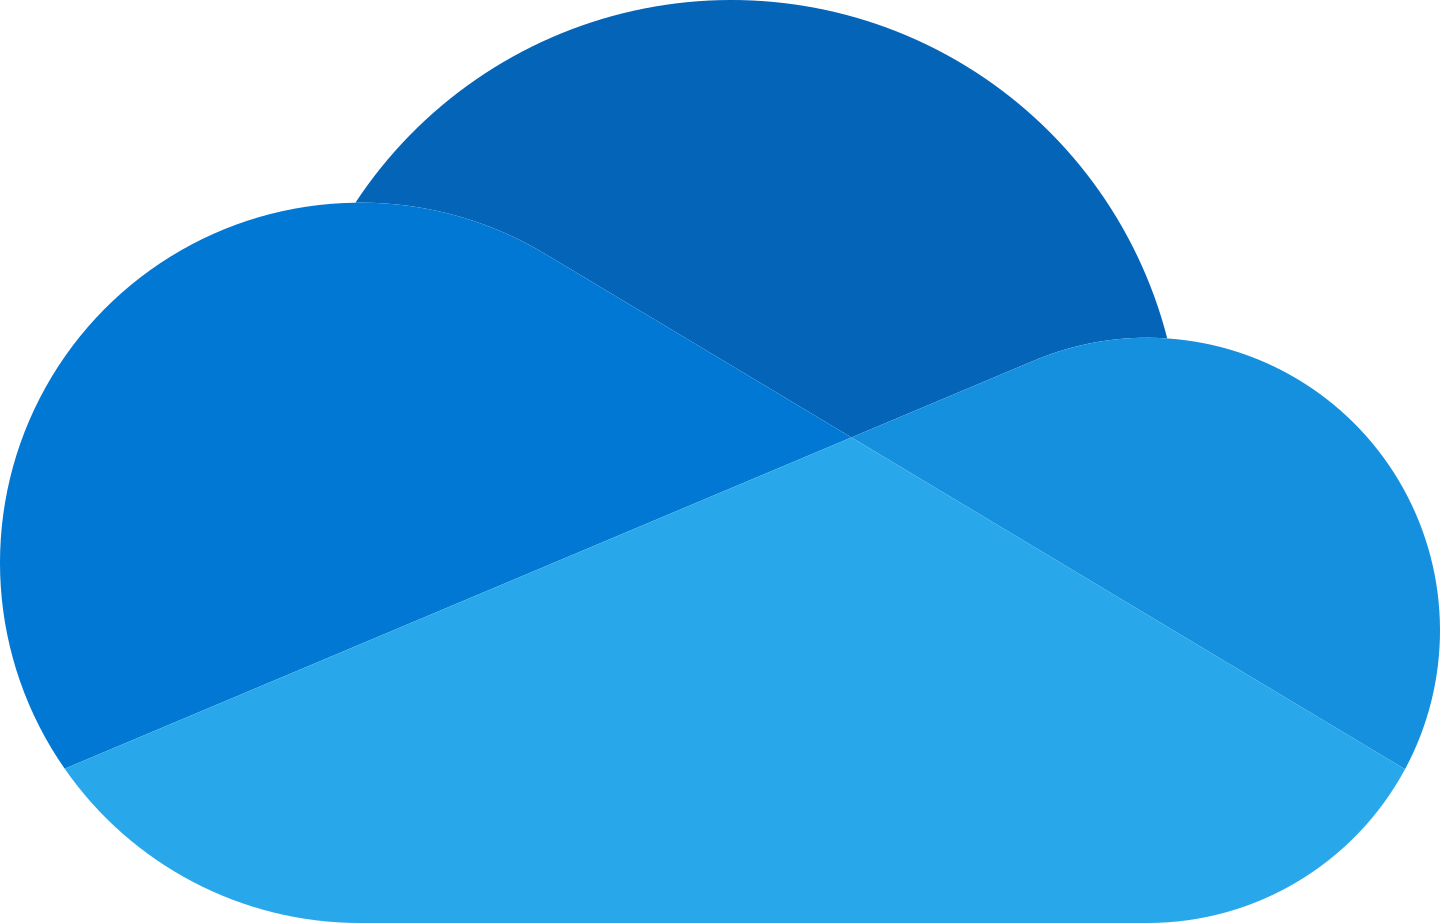 onedrive logo 2 - OneDrive Logo